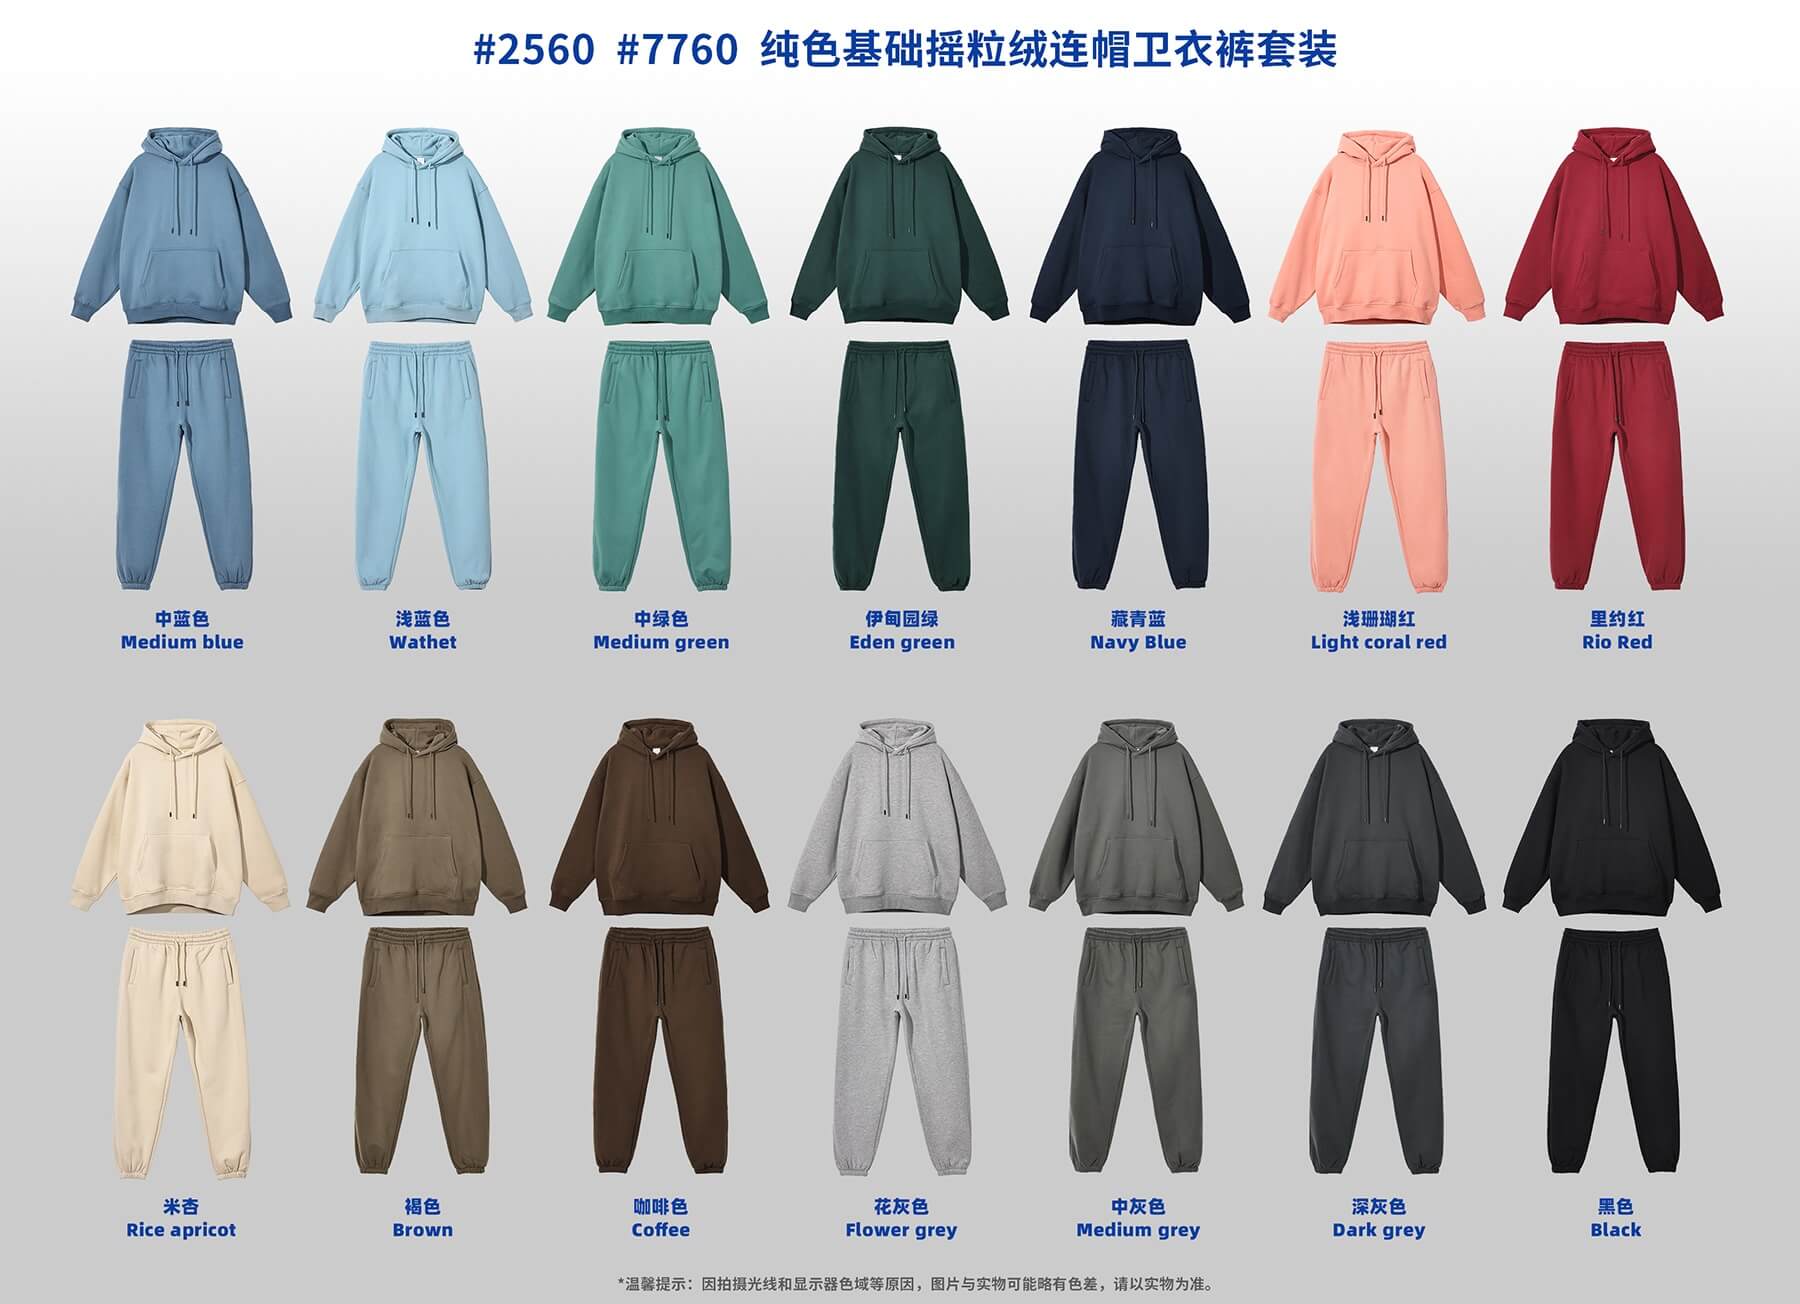 #7760 Thick Sweatpants Manufacturers 360gsm Thick Polar Fleece 4